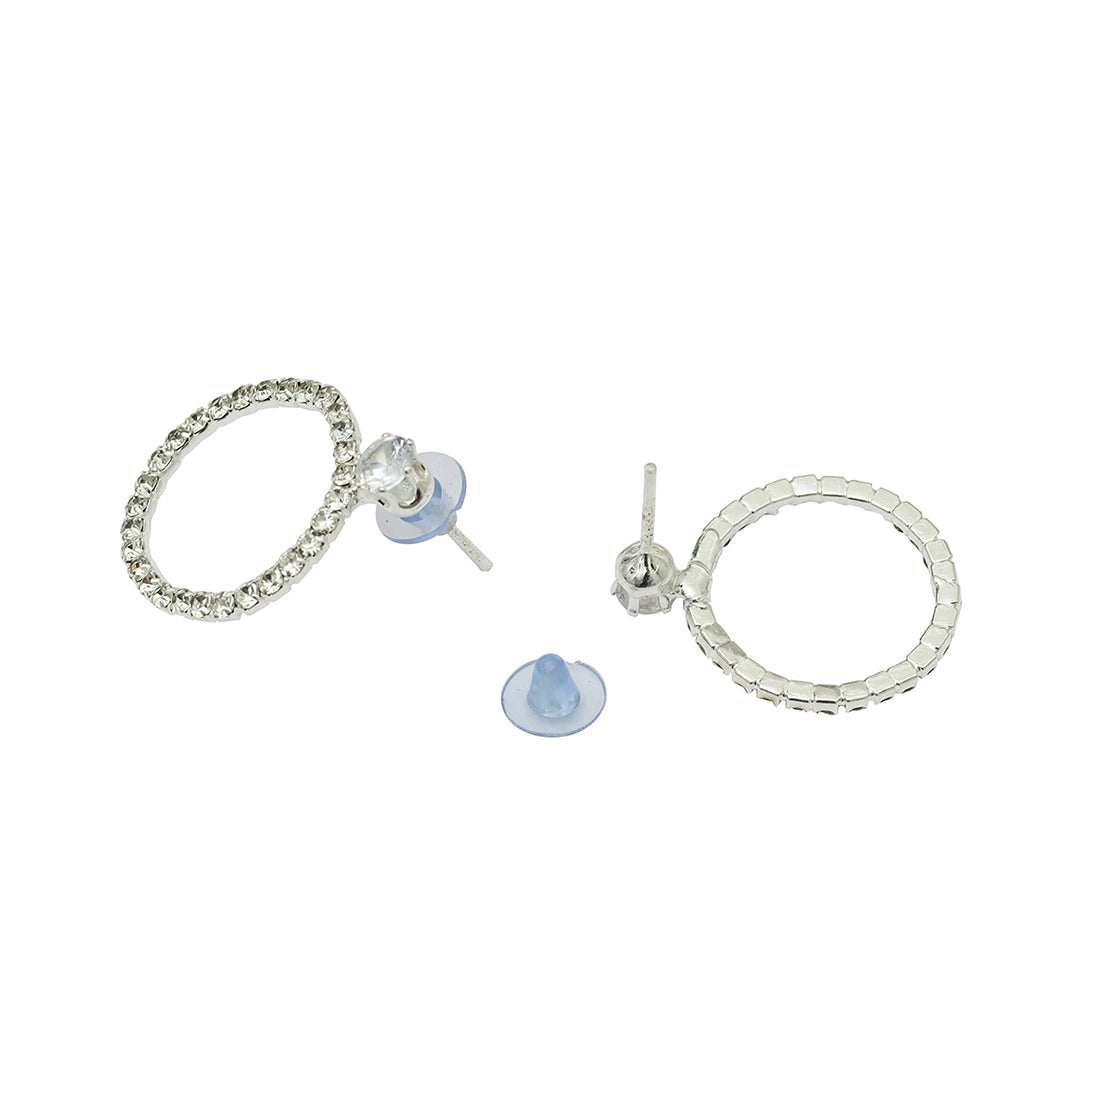 Set Of 2 Multi Color Circular And Tassels Diamonti Earrings.